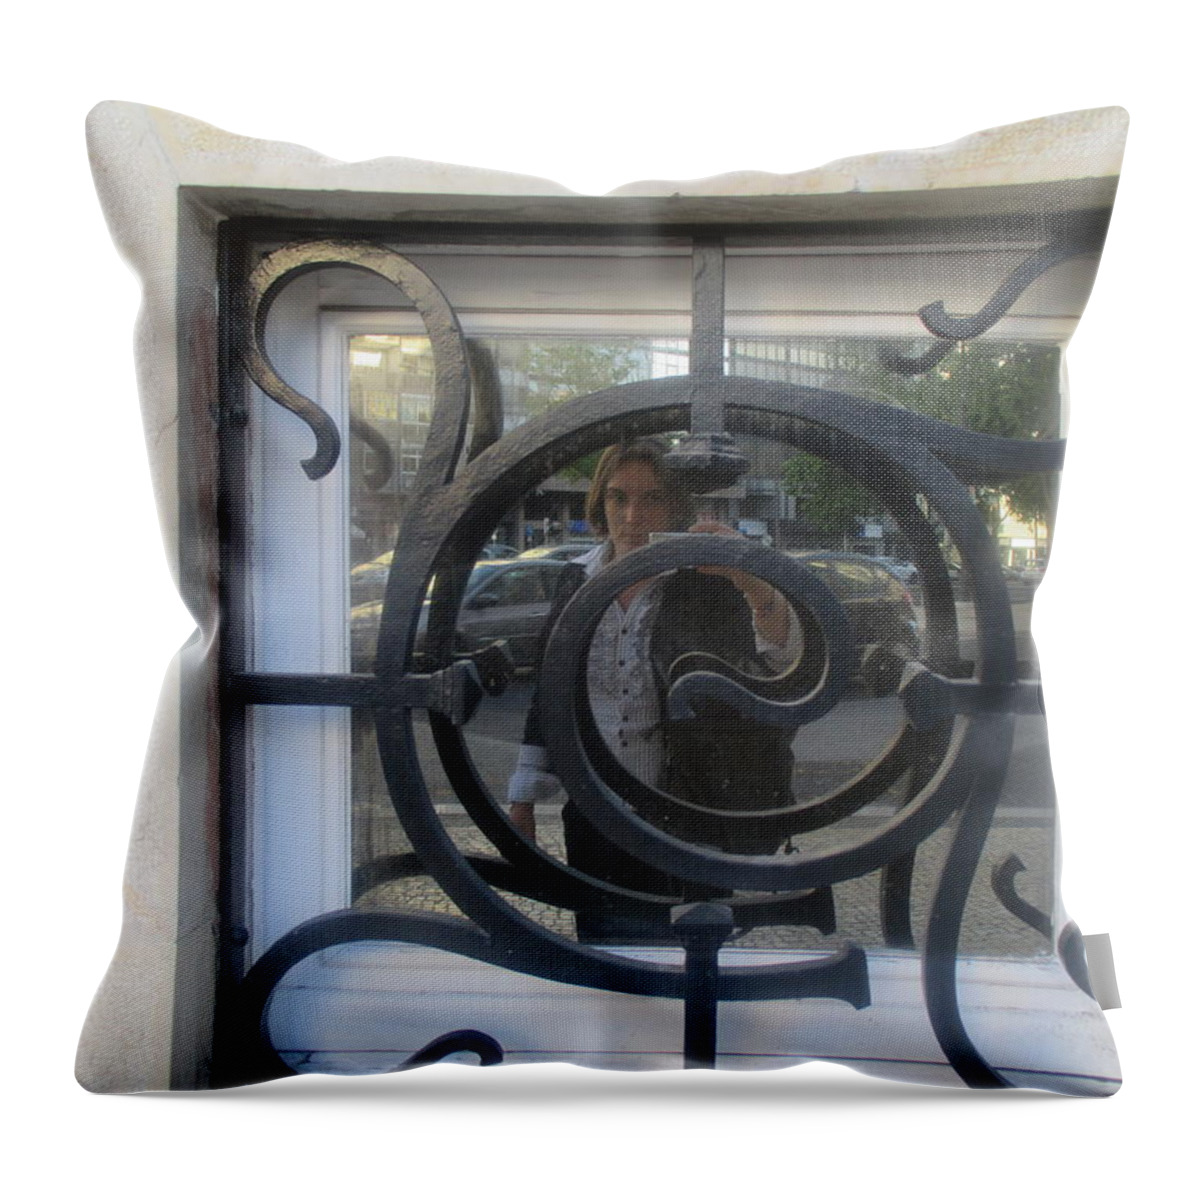 Window Throw Pillow featuring the photograph Window with iron detail by Anamarija Marinovic